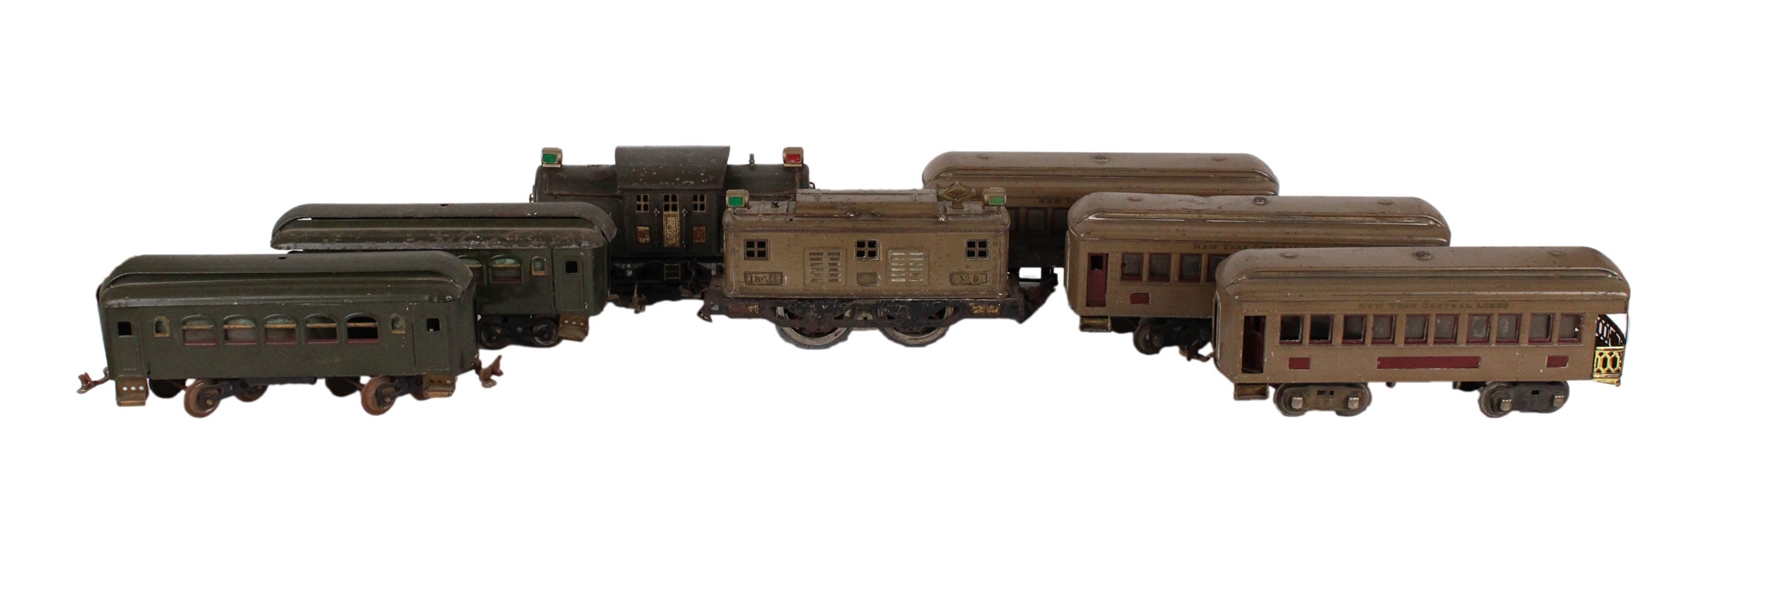 Two Prewar Lionel Train Sets